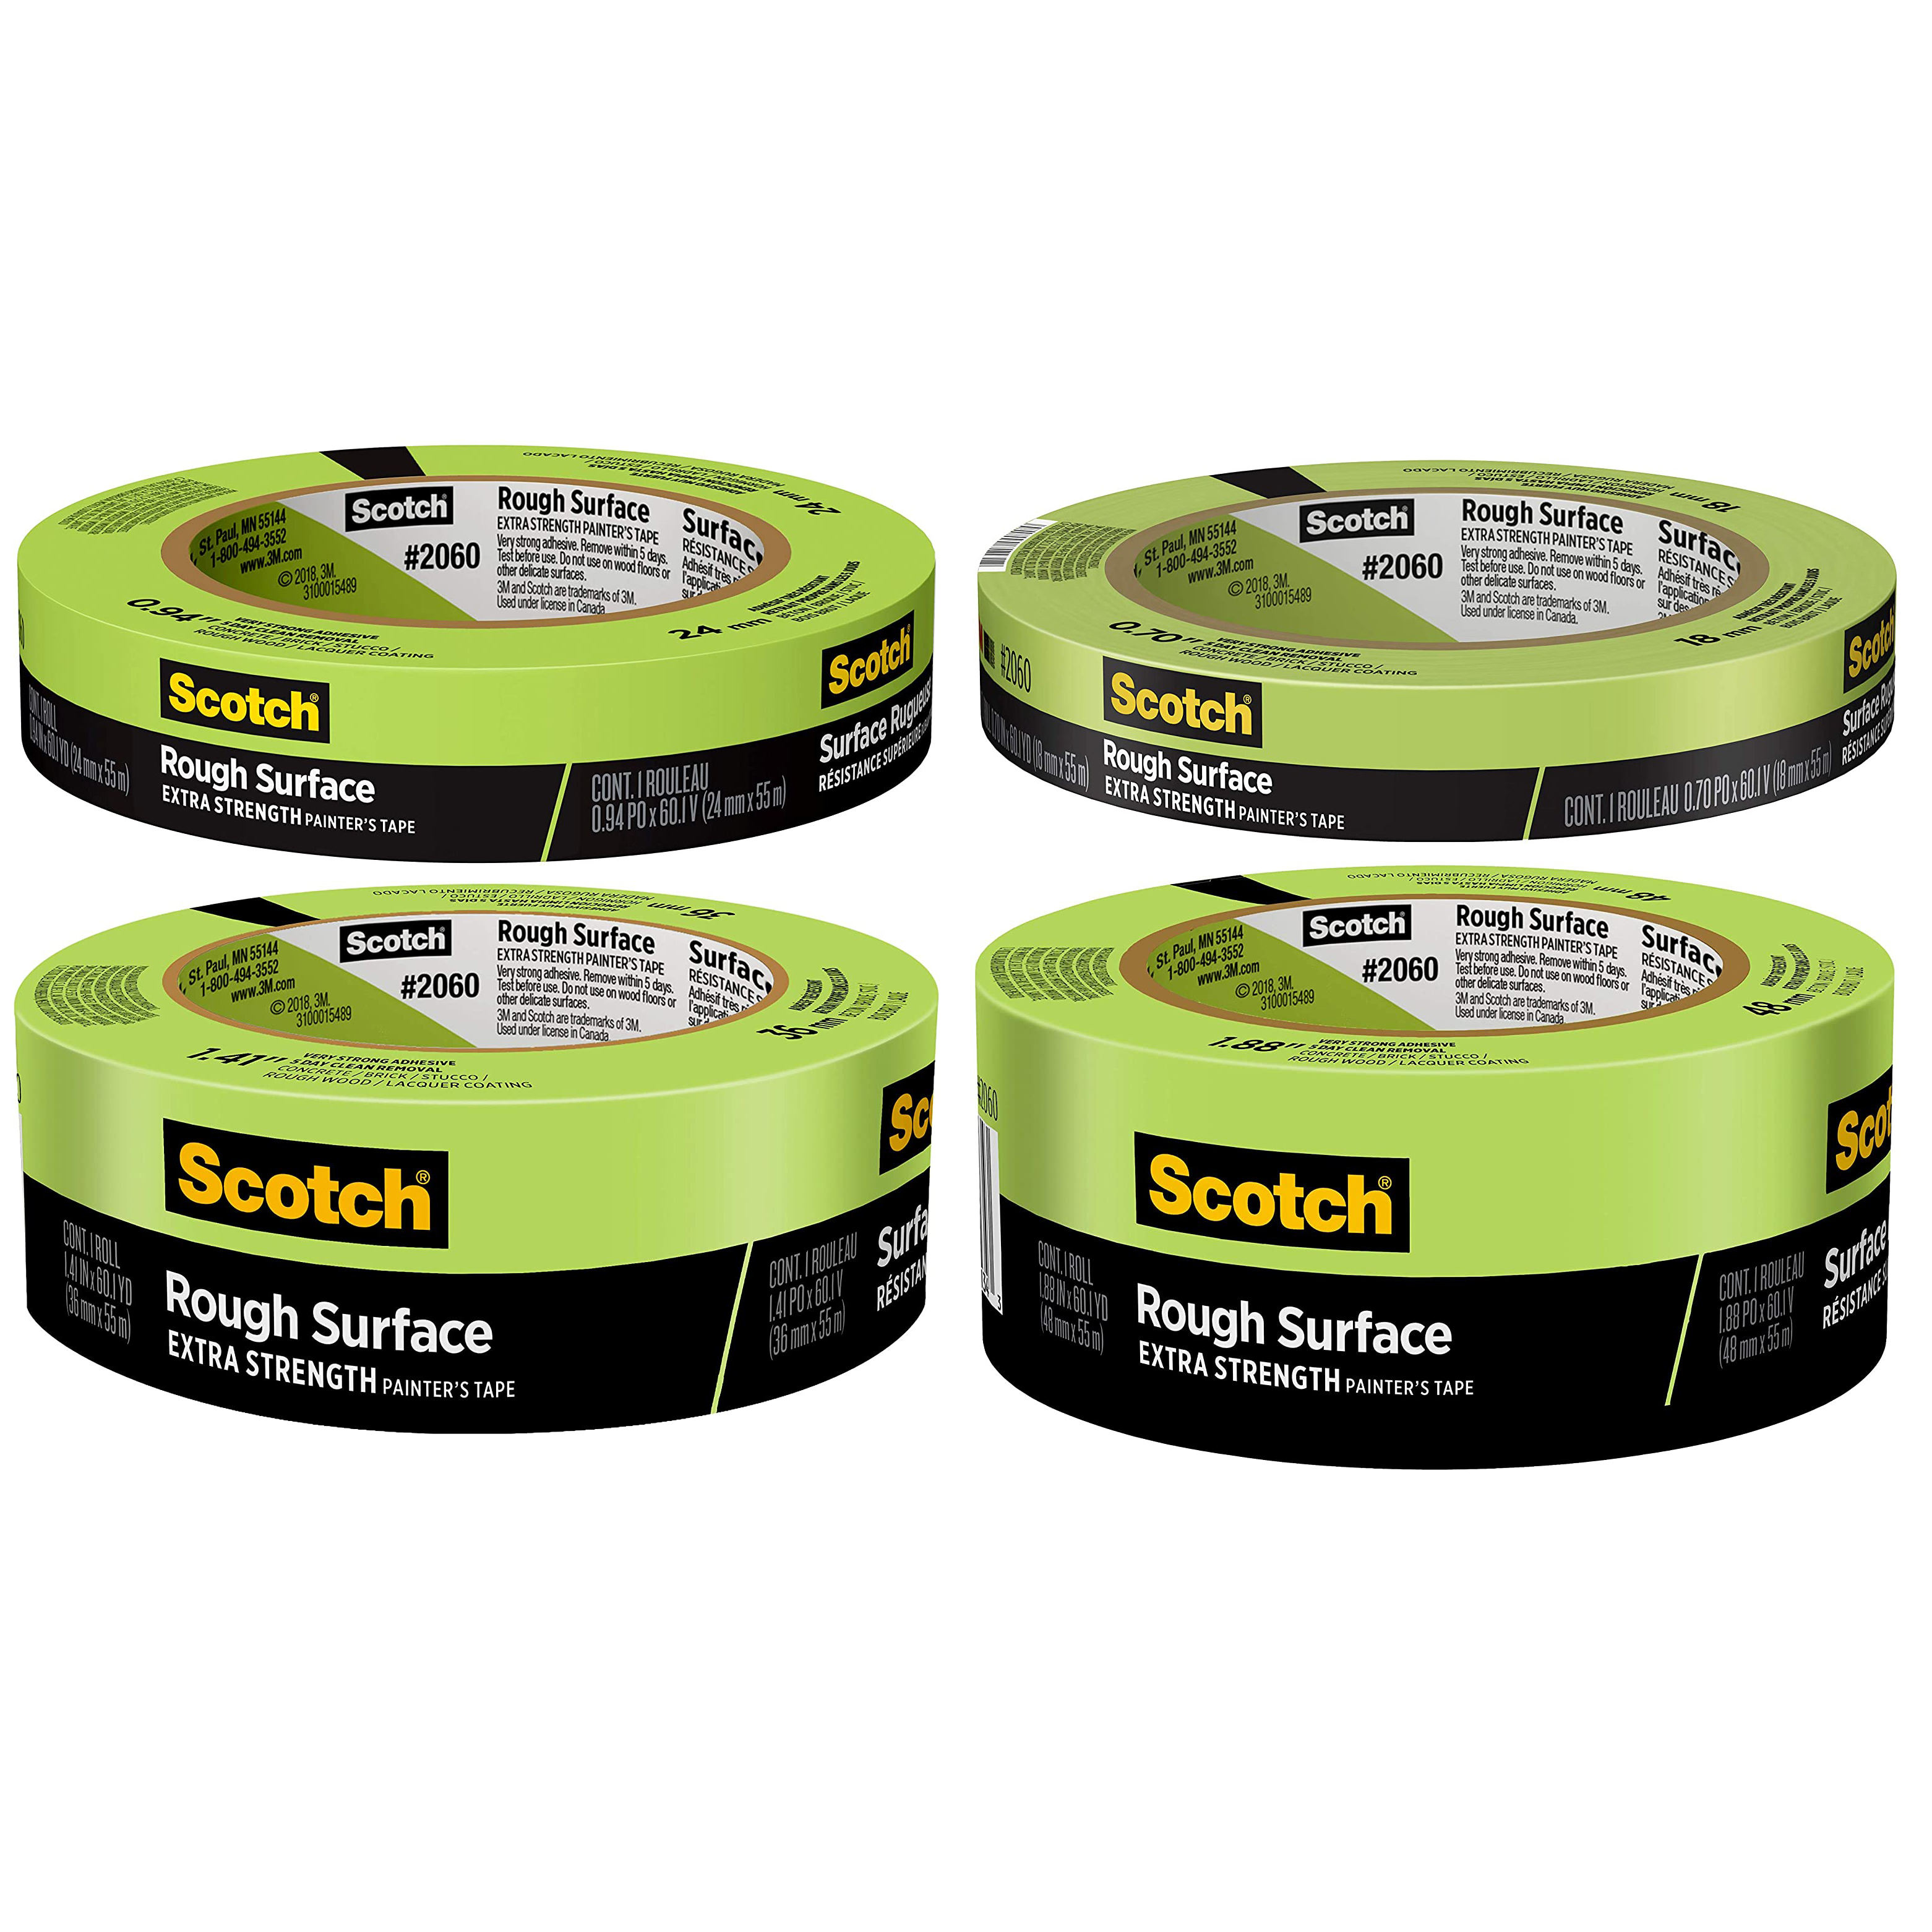 Scotch Rough Surface Extra Strength Masking Tape 1.41 inch x 60 yard 1 2060 